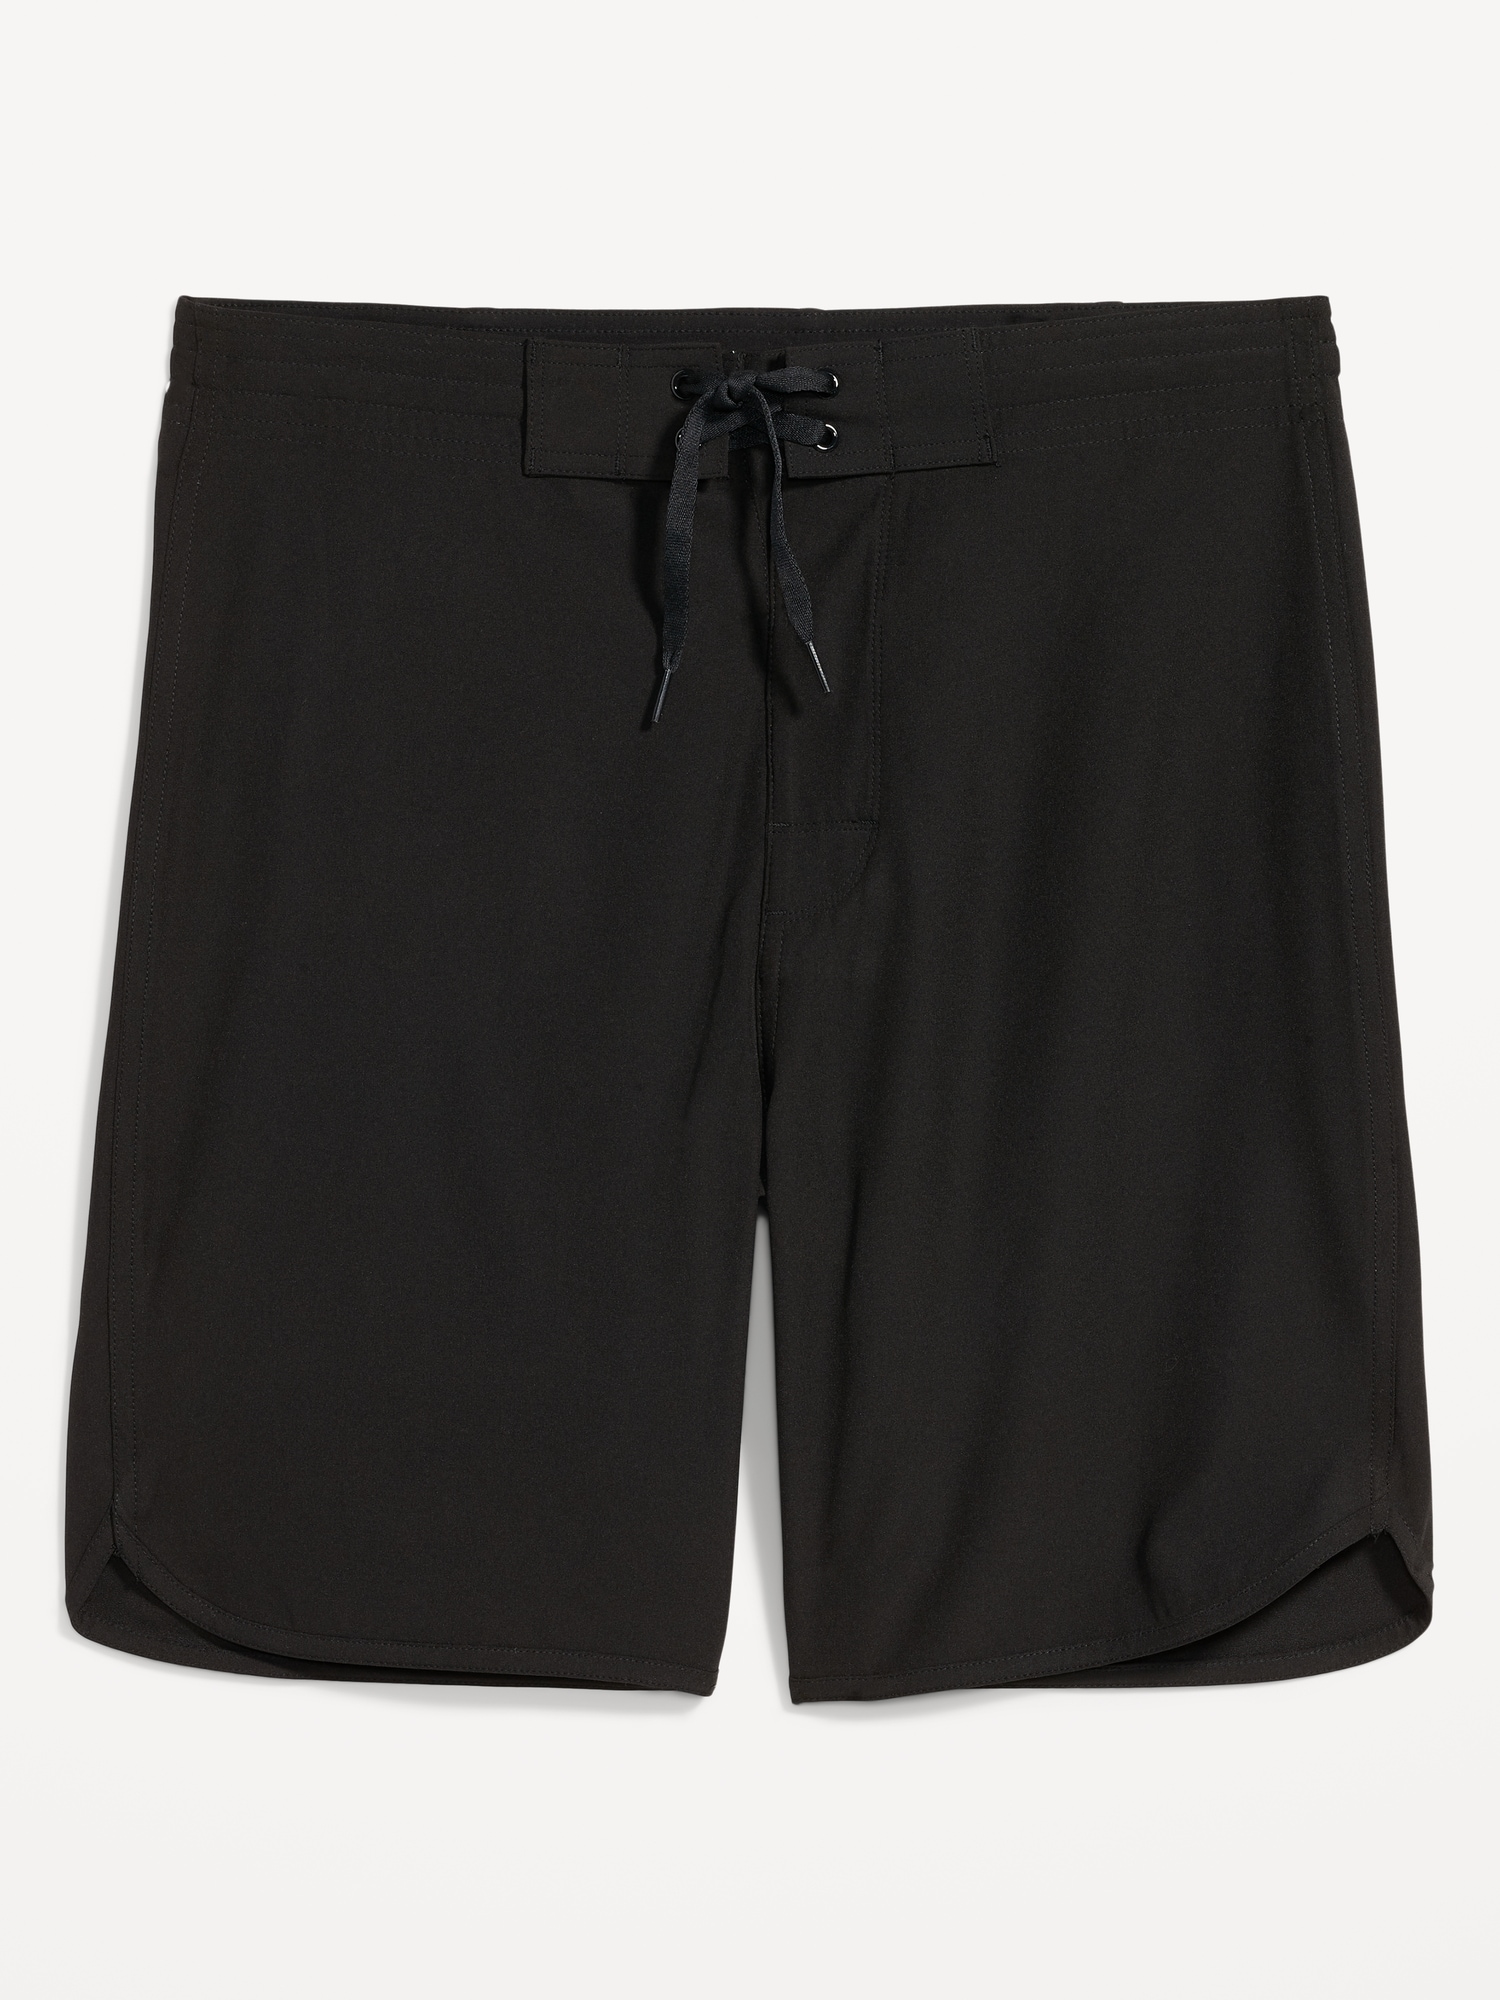 Built-In Flex Board Shorts for Men -- 8-inch inseam | Old Navy